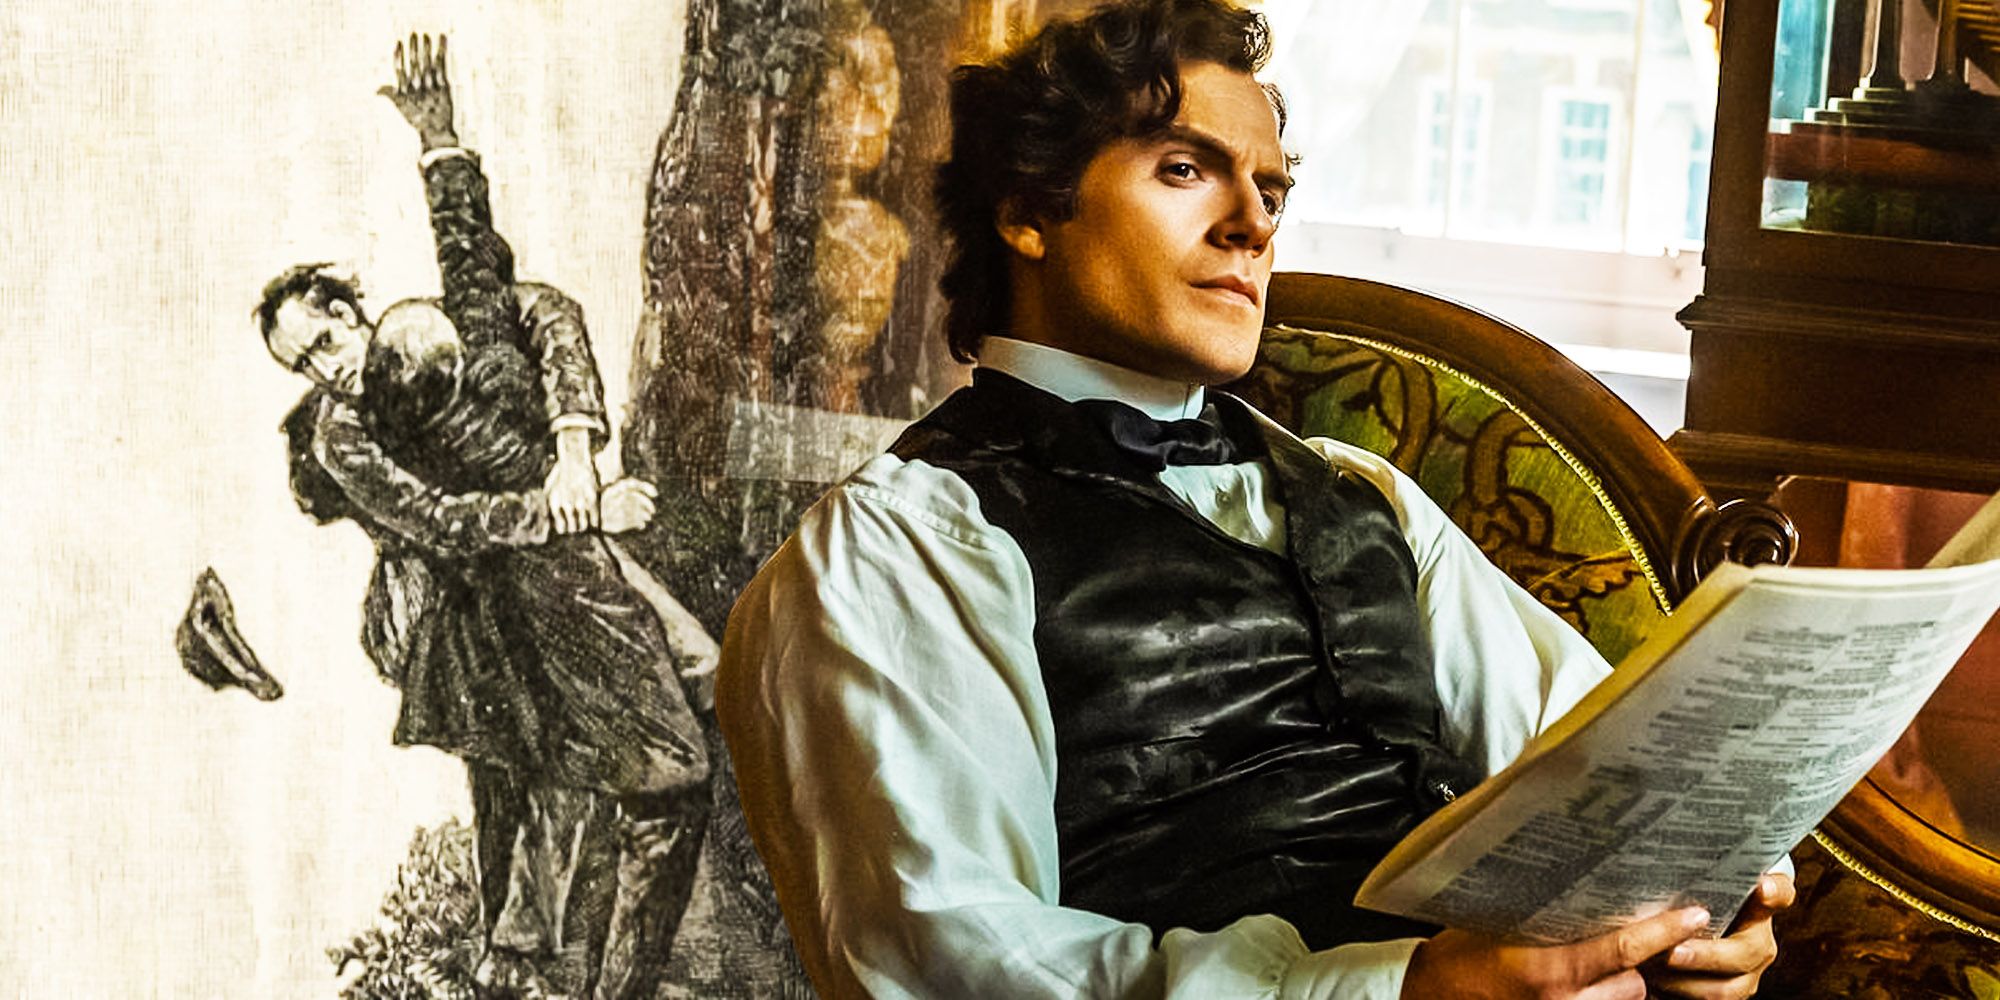 An image of Sherlock Holmes sketch from Doyle's novels alongside an image of Henry Cavill as Sherlock in Enola Holmes. 